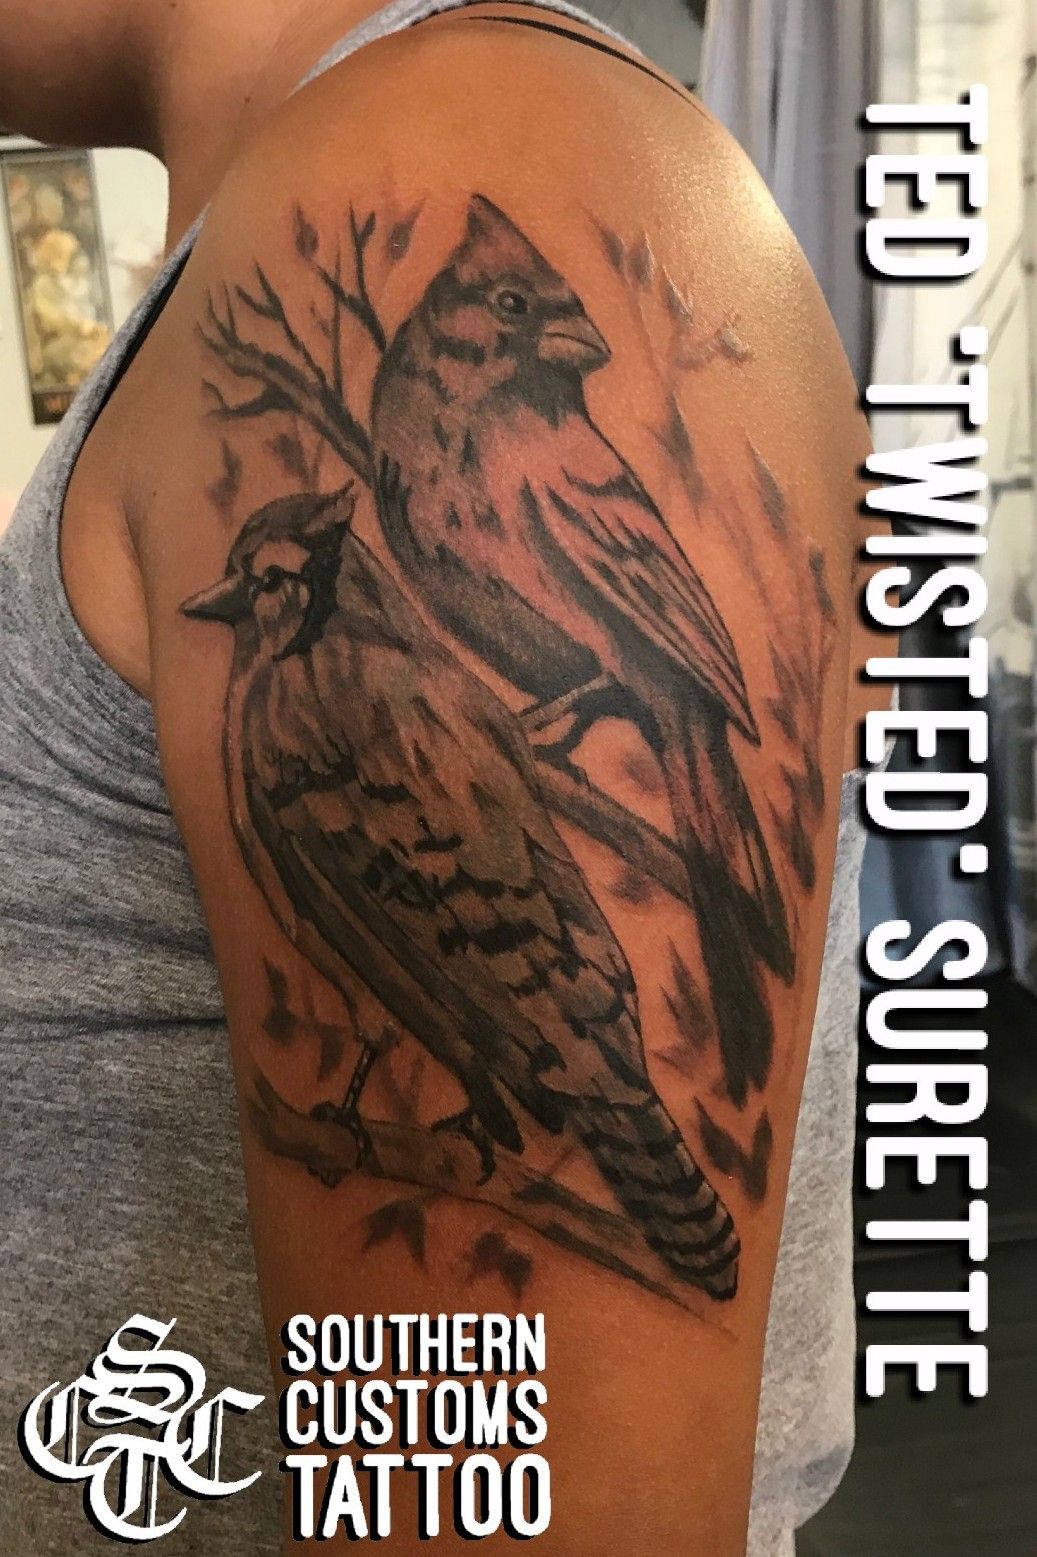 hannahsteeleart on Twitter Cardinal amp Blue Jay for Joes  grandparents tattoo tattooartist httpstcoN565cCDa94  Twitter